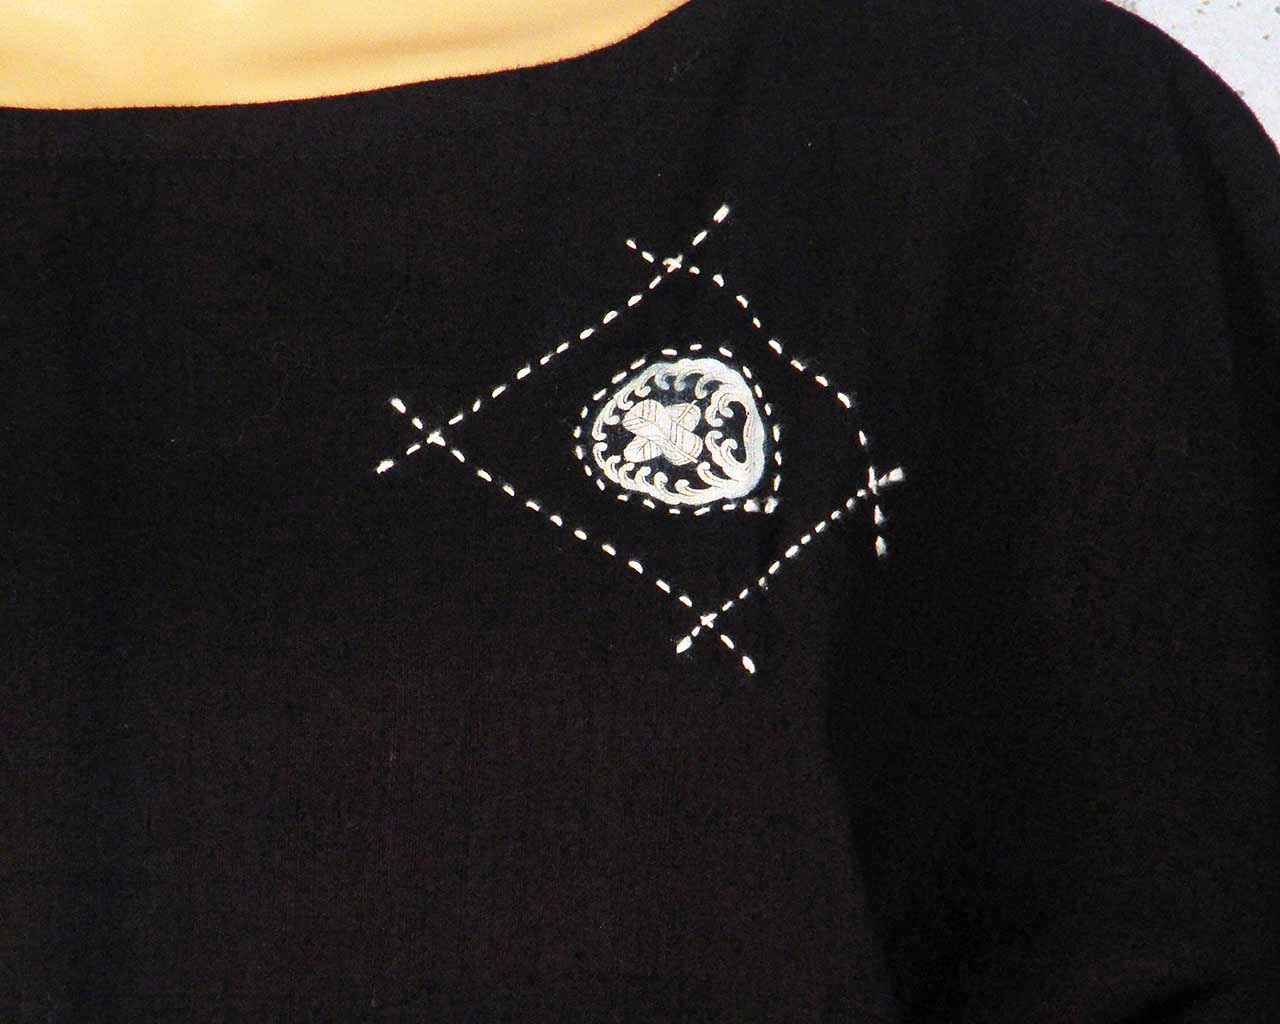 Tango cotton dress with black crest